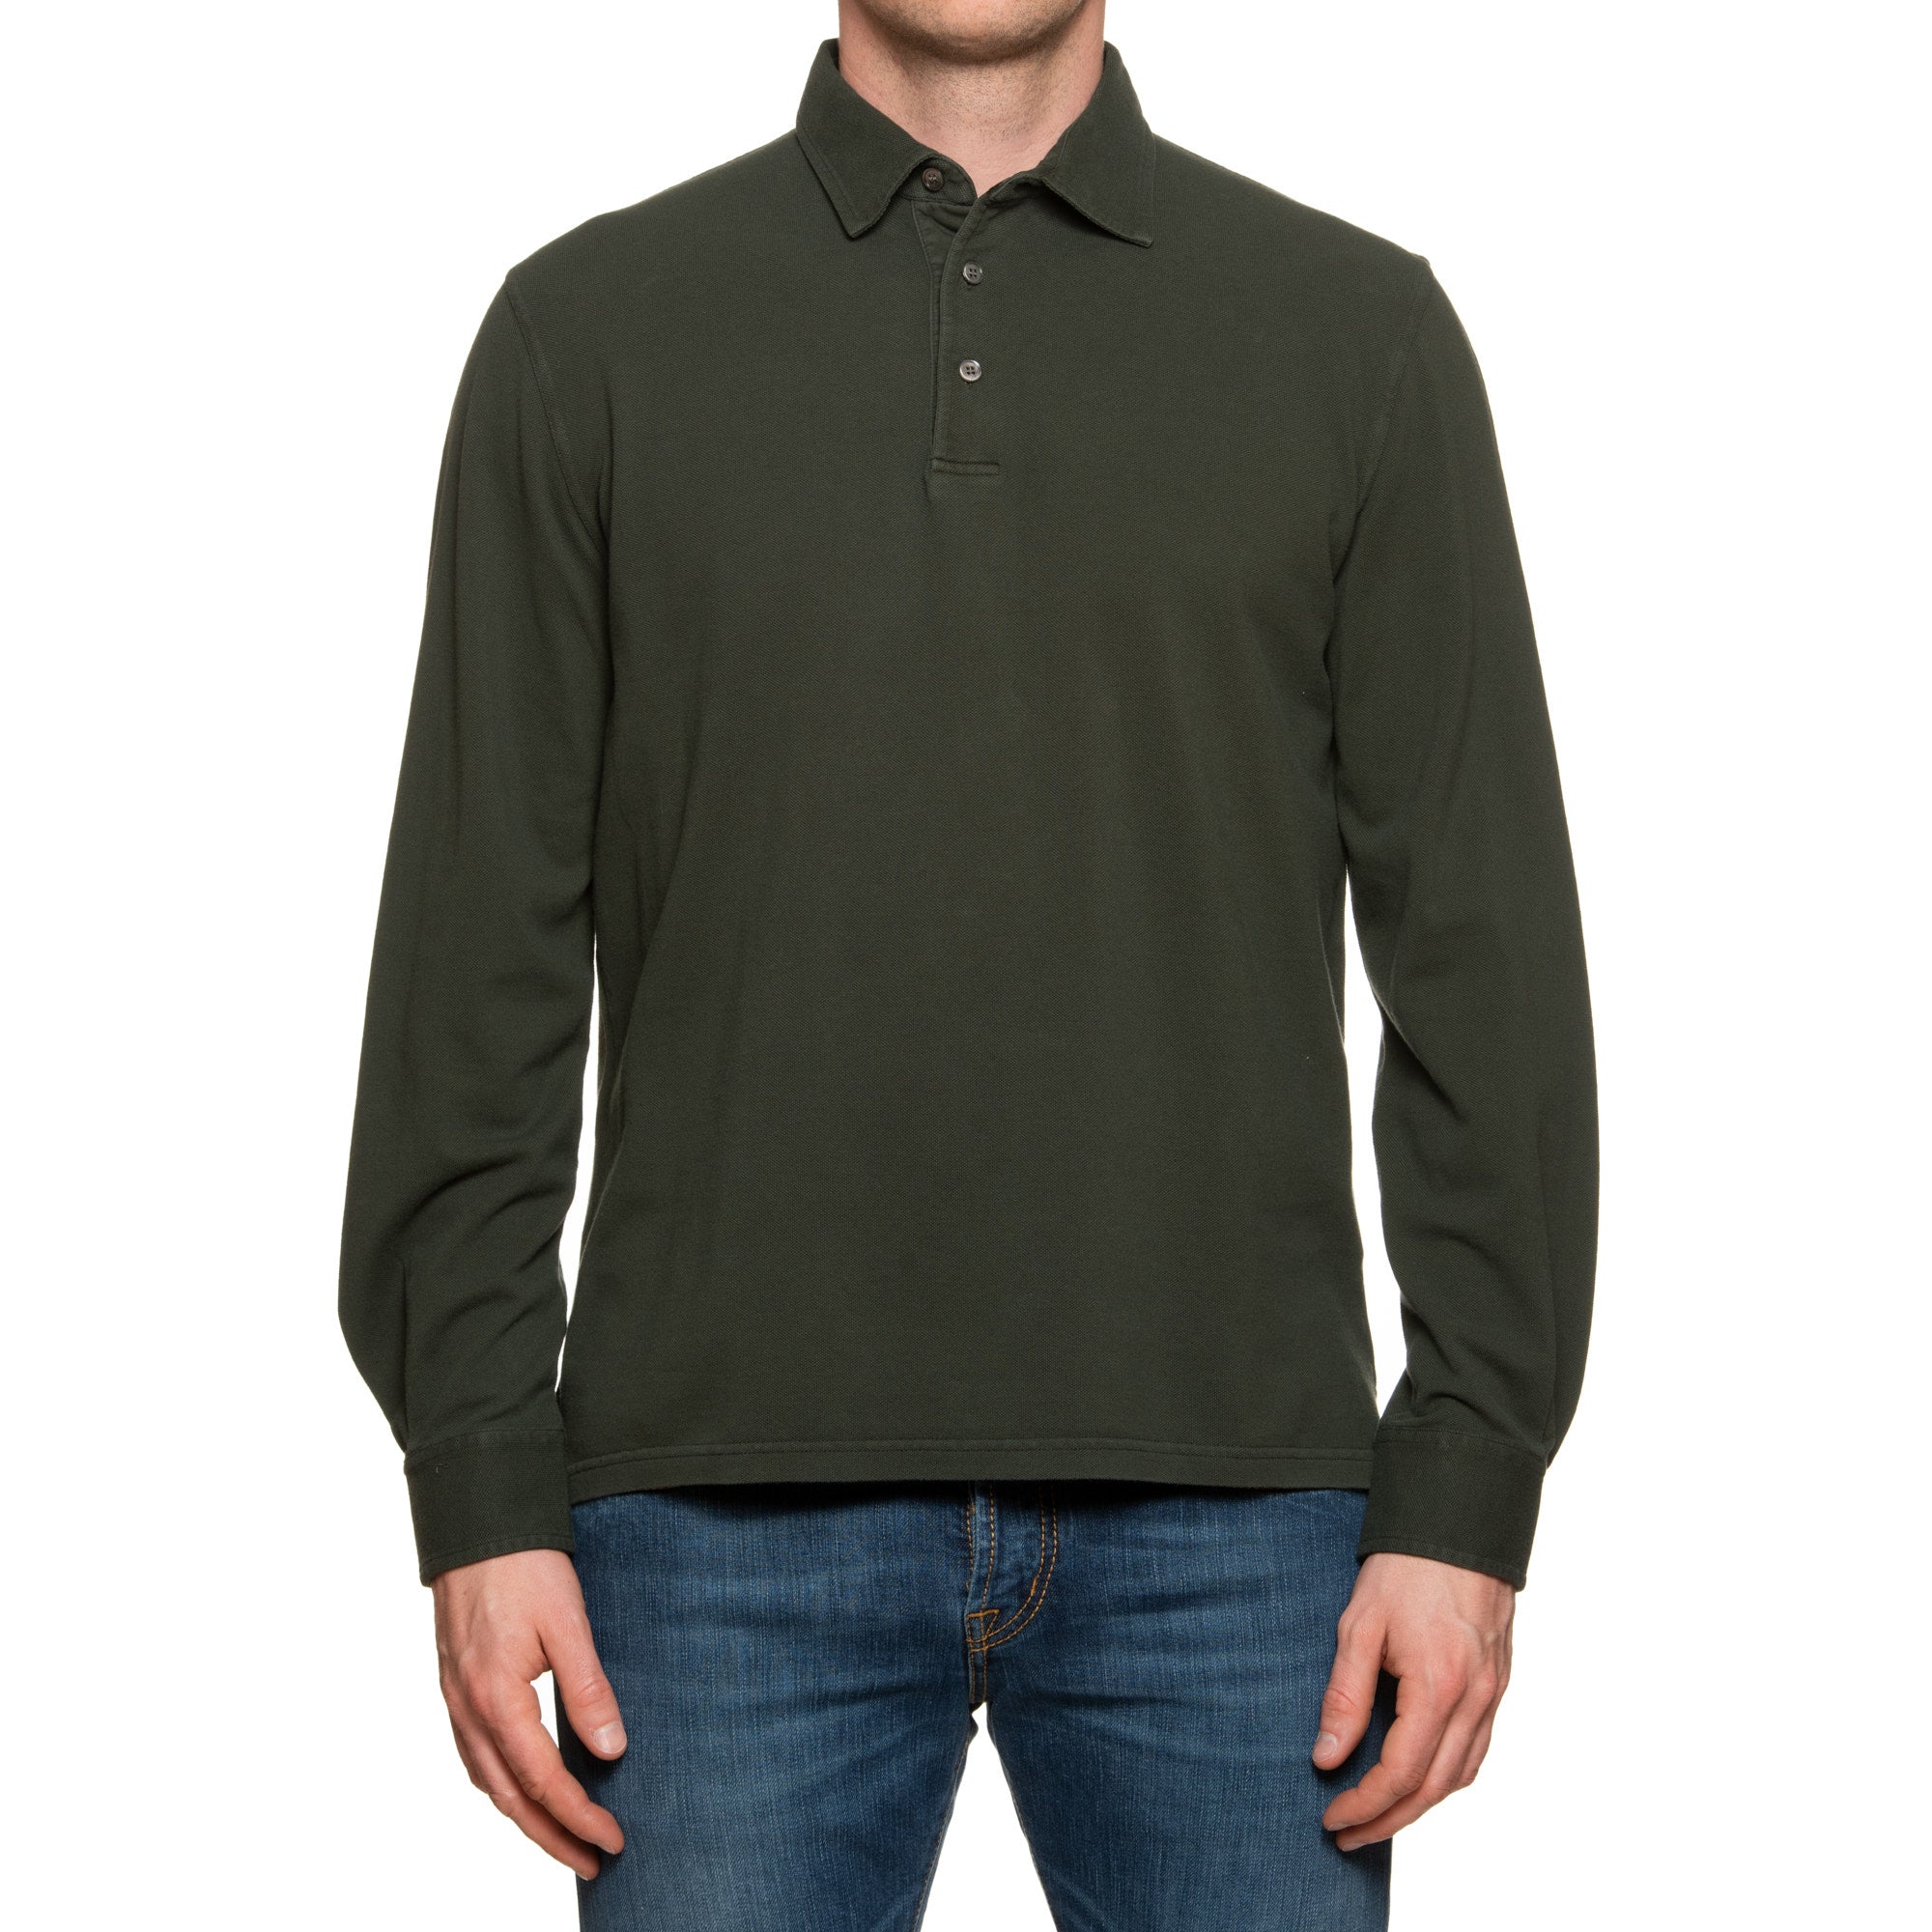 FEDELI "North" Army Green Cotton Pique Long Sleeve Polo Shirt NEW FEDELI